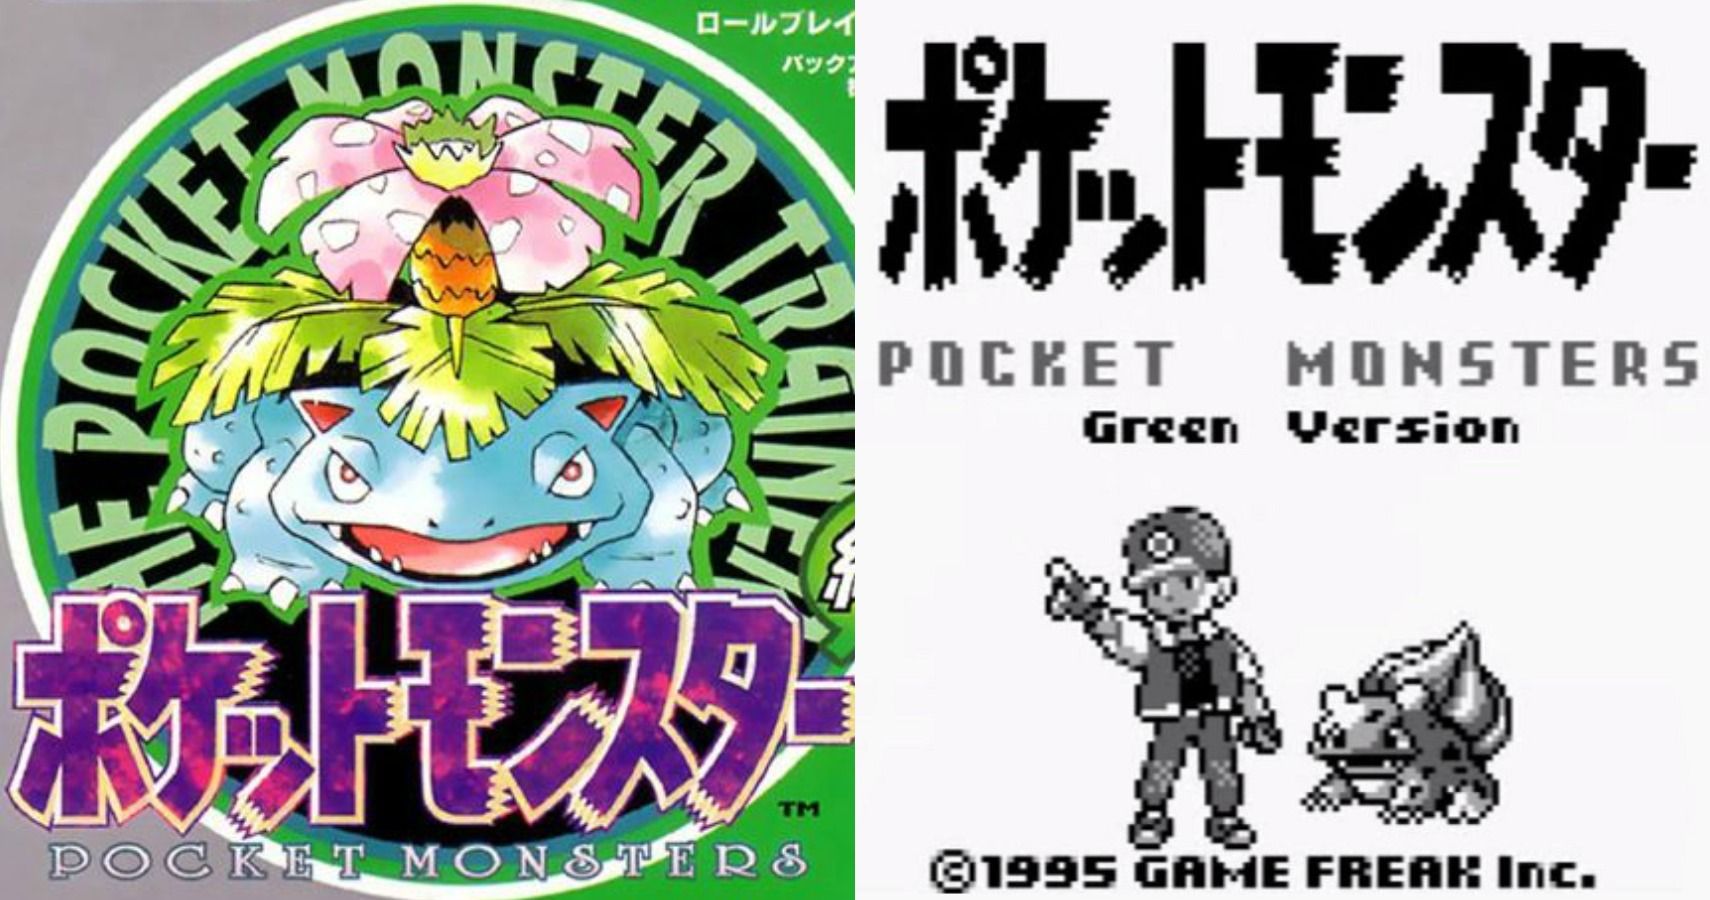 Japan Pokémon Fans Rank Red & Green As The Most Popular Pokémon Game